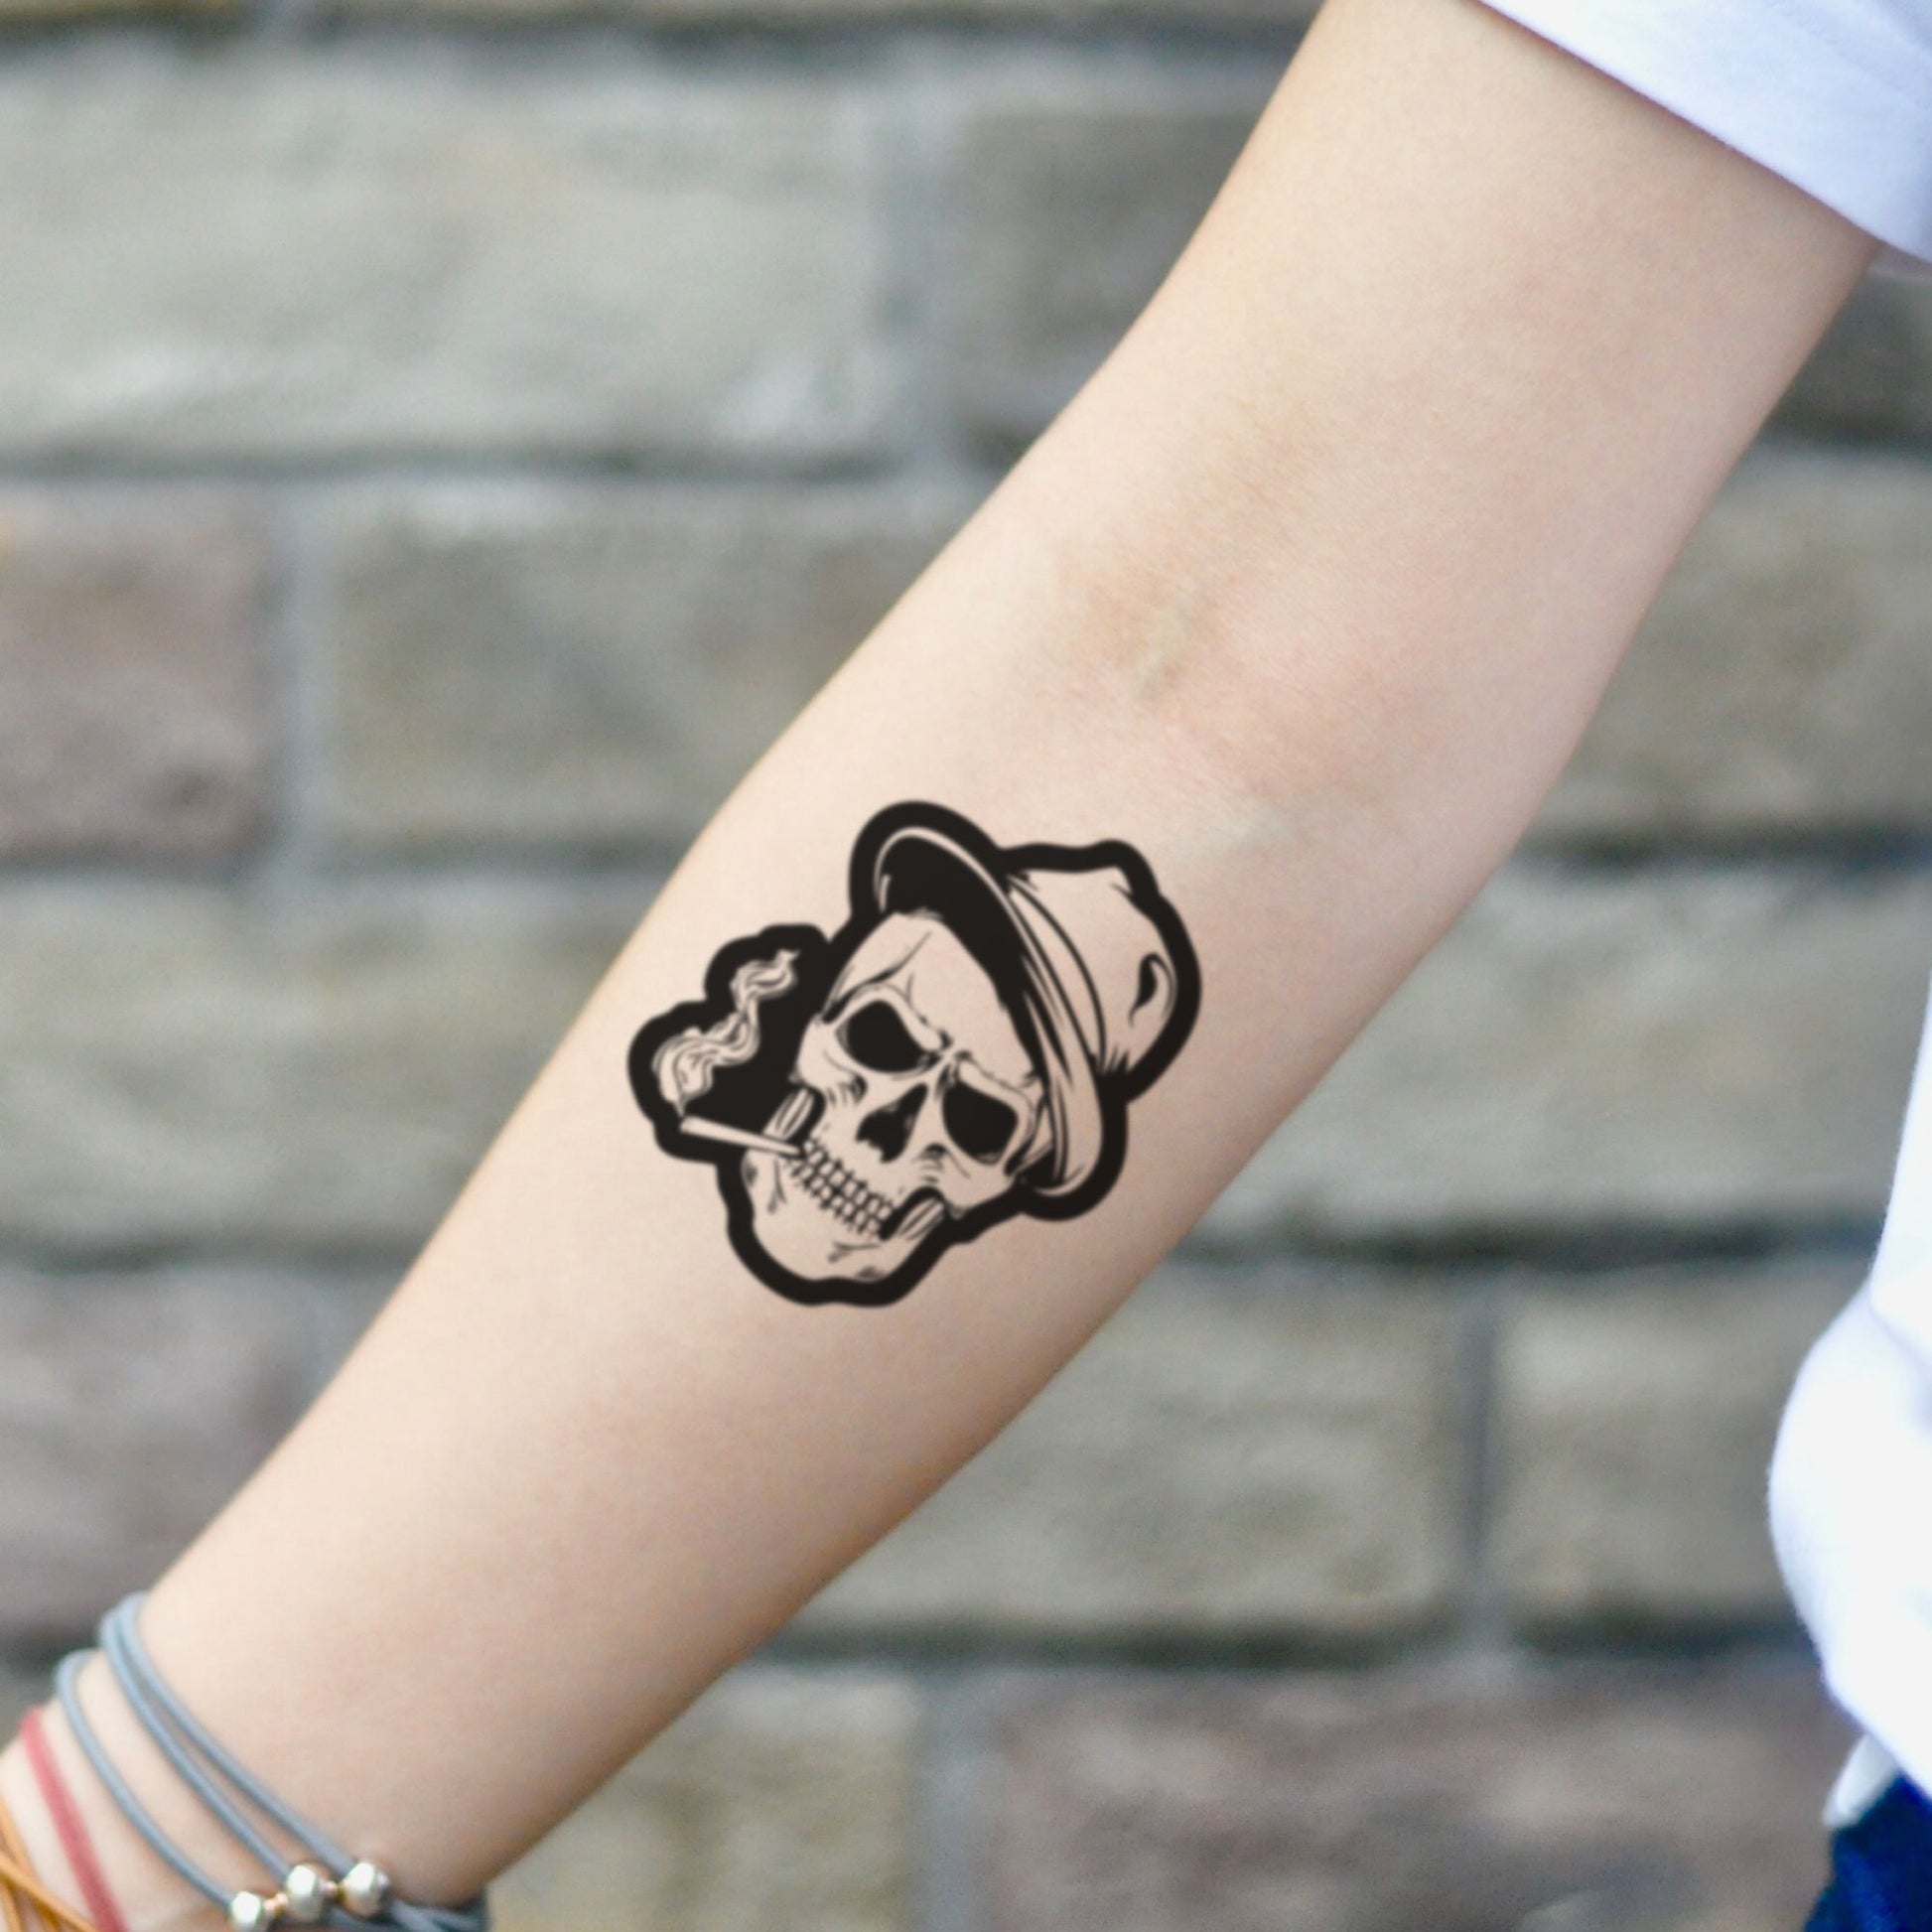 fake small smoking skull head smokey cigarette illustrative temporary tattoo sticker design idea on inner arm